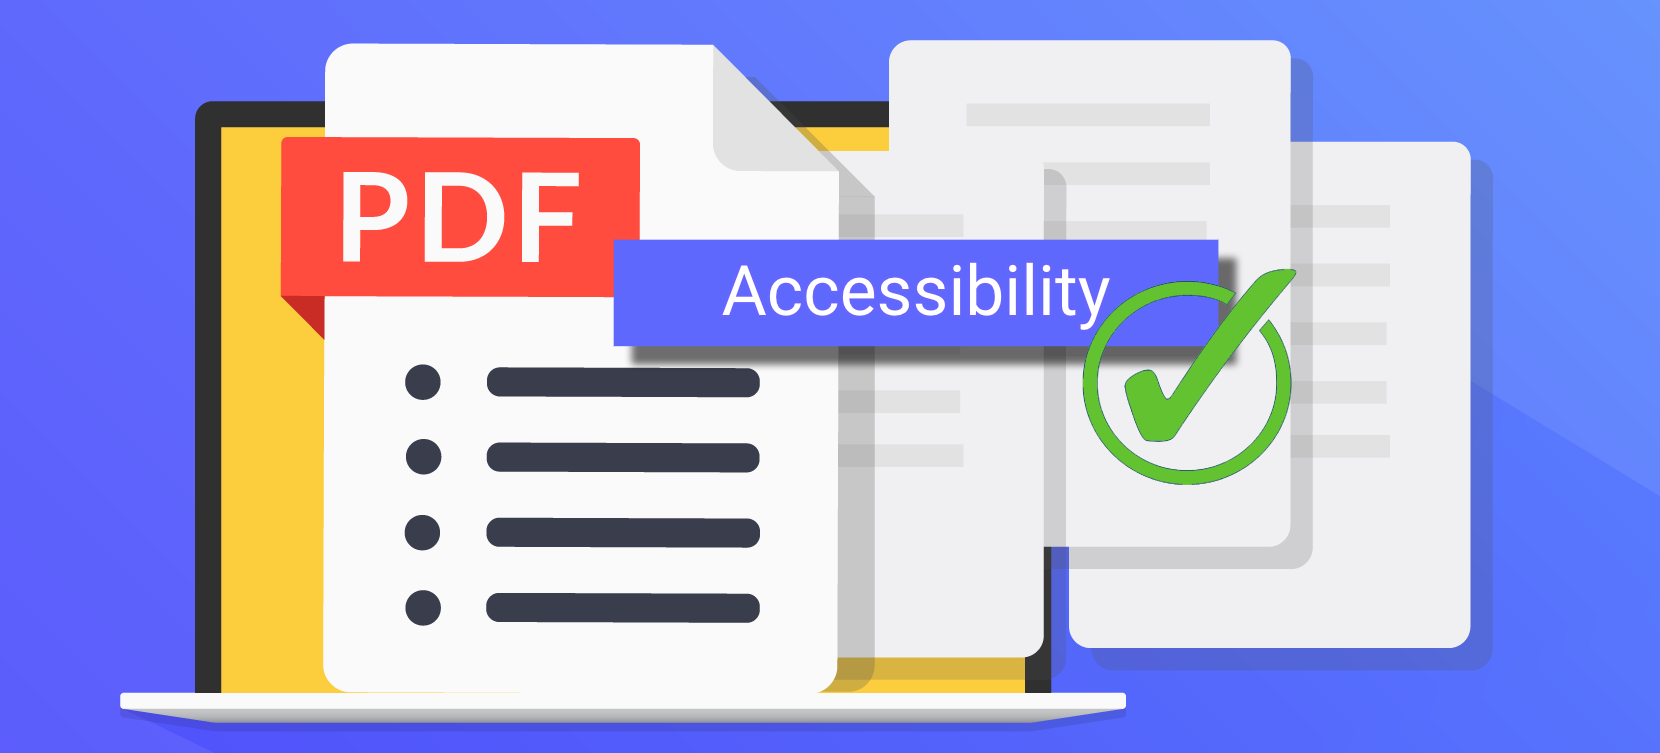 PDF Accessibility Guide and Checklist